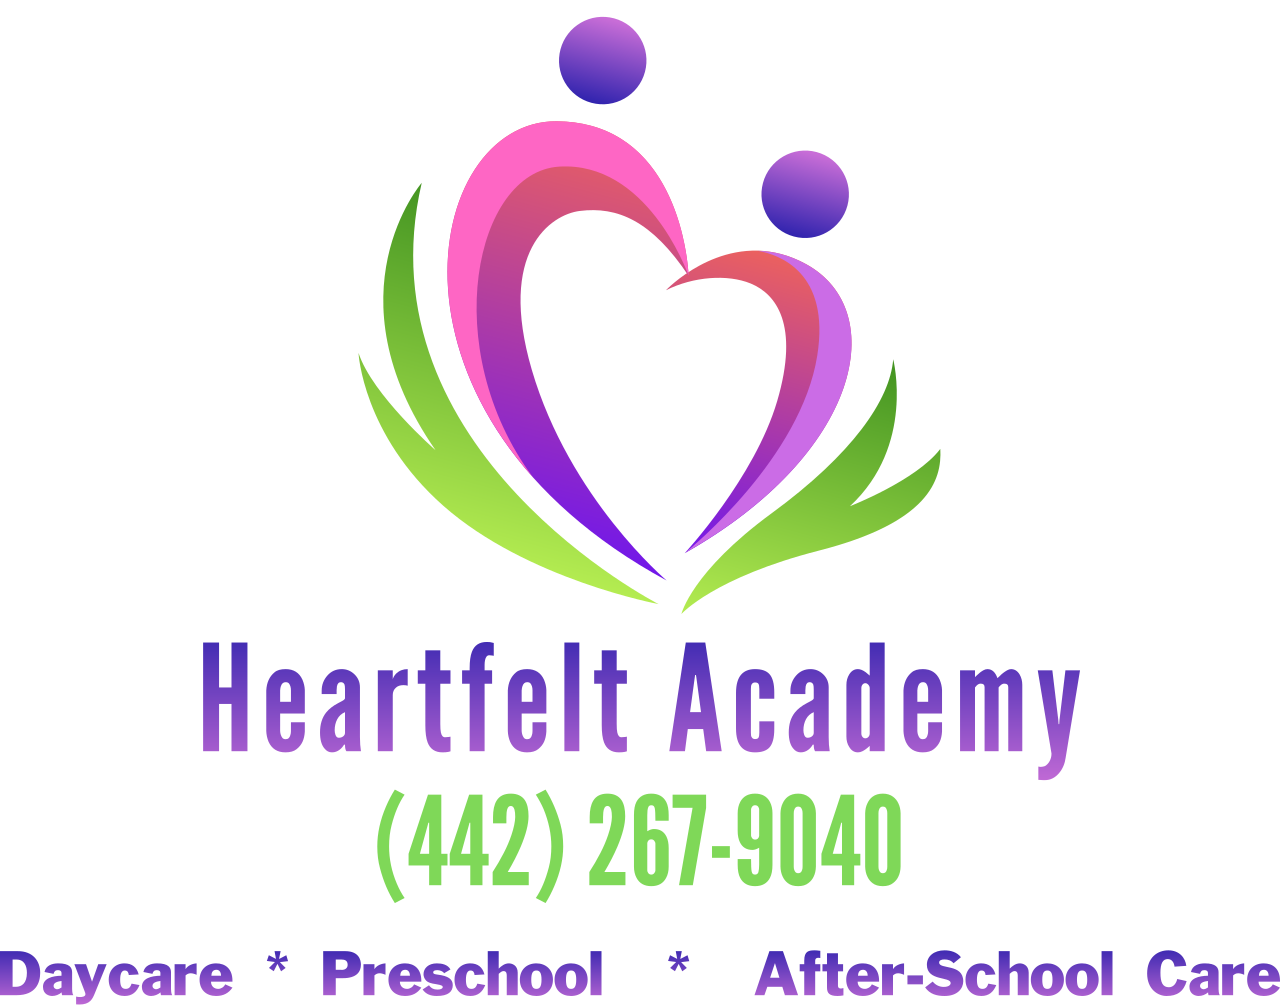 Heartfelt Academy's web page